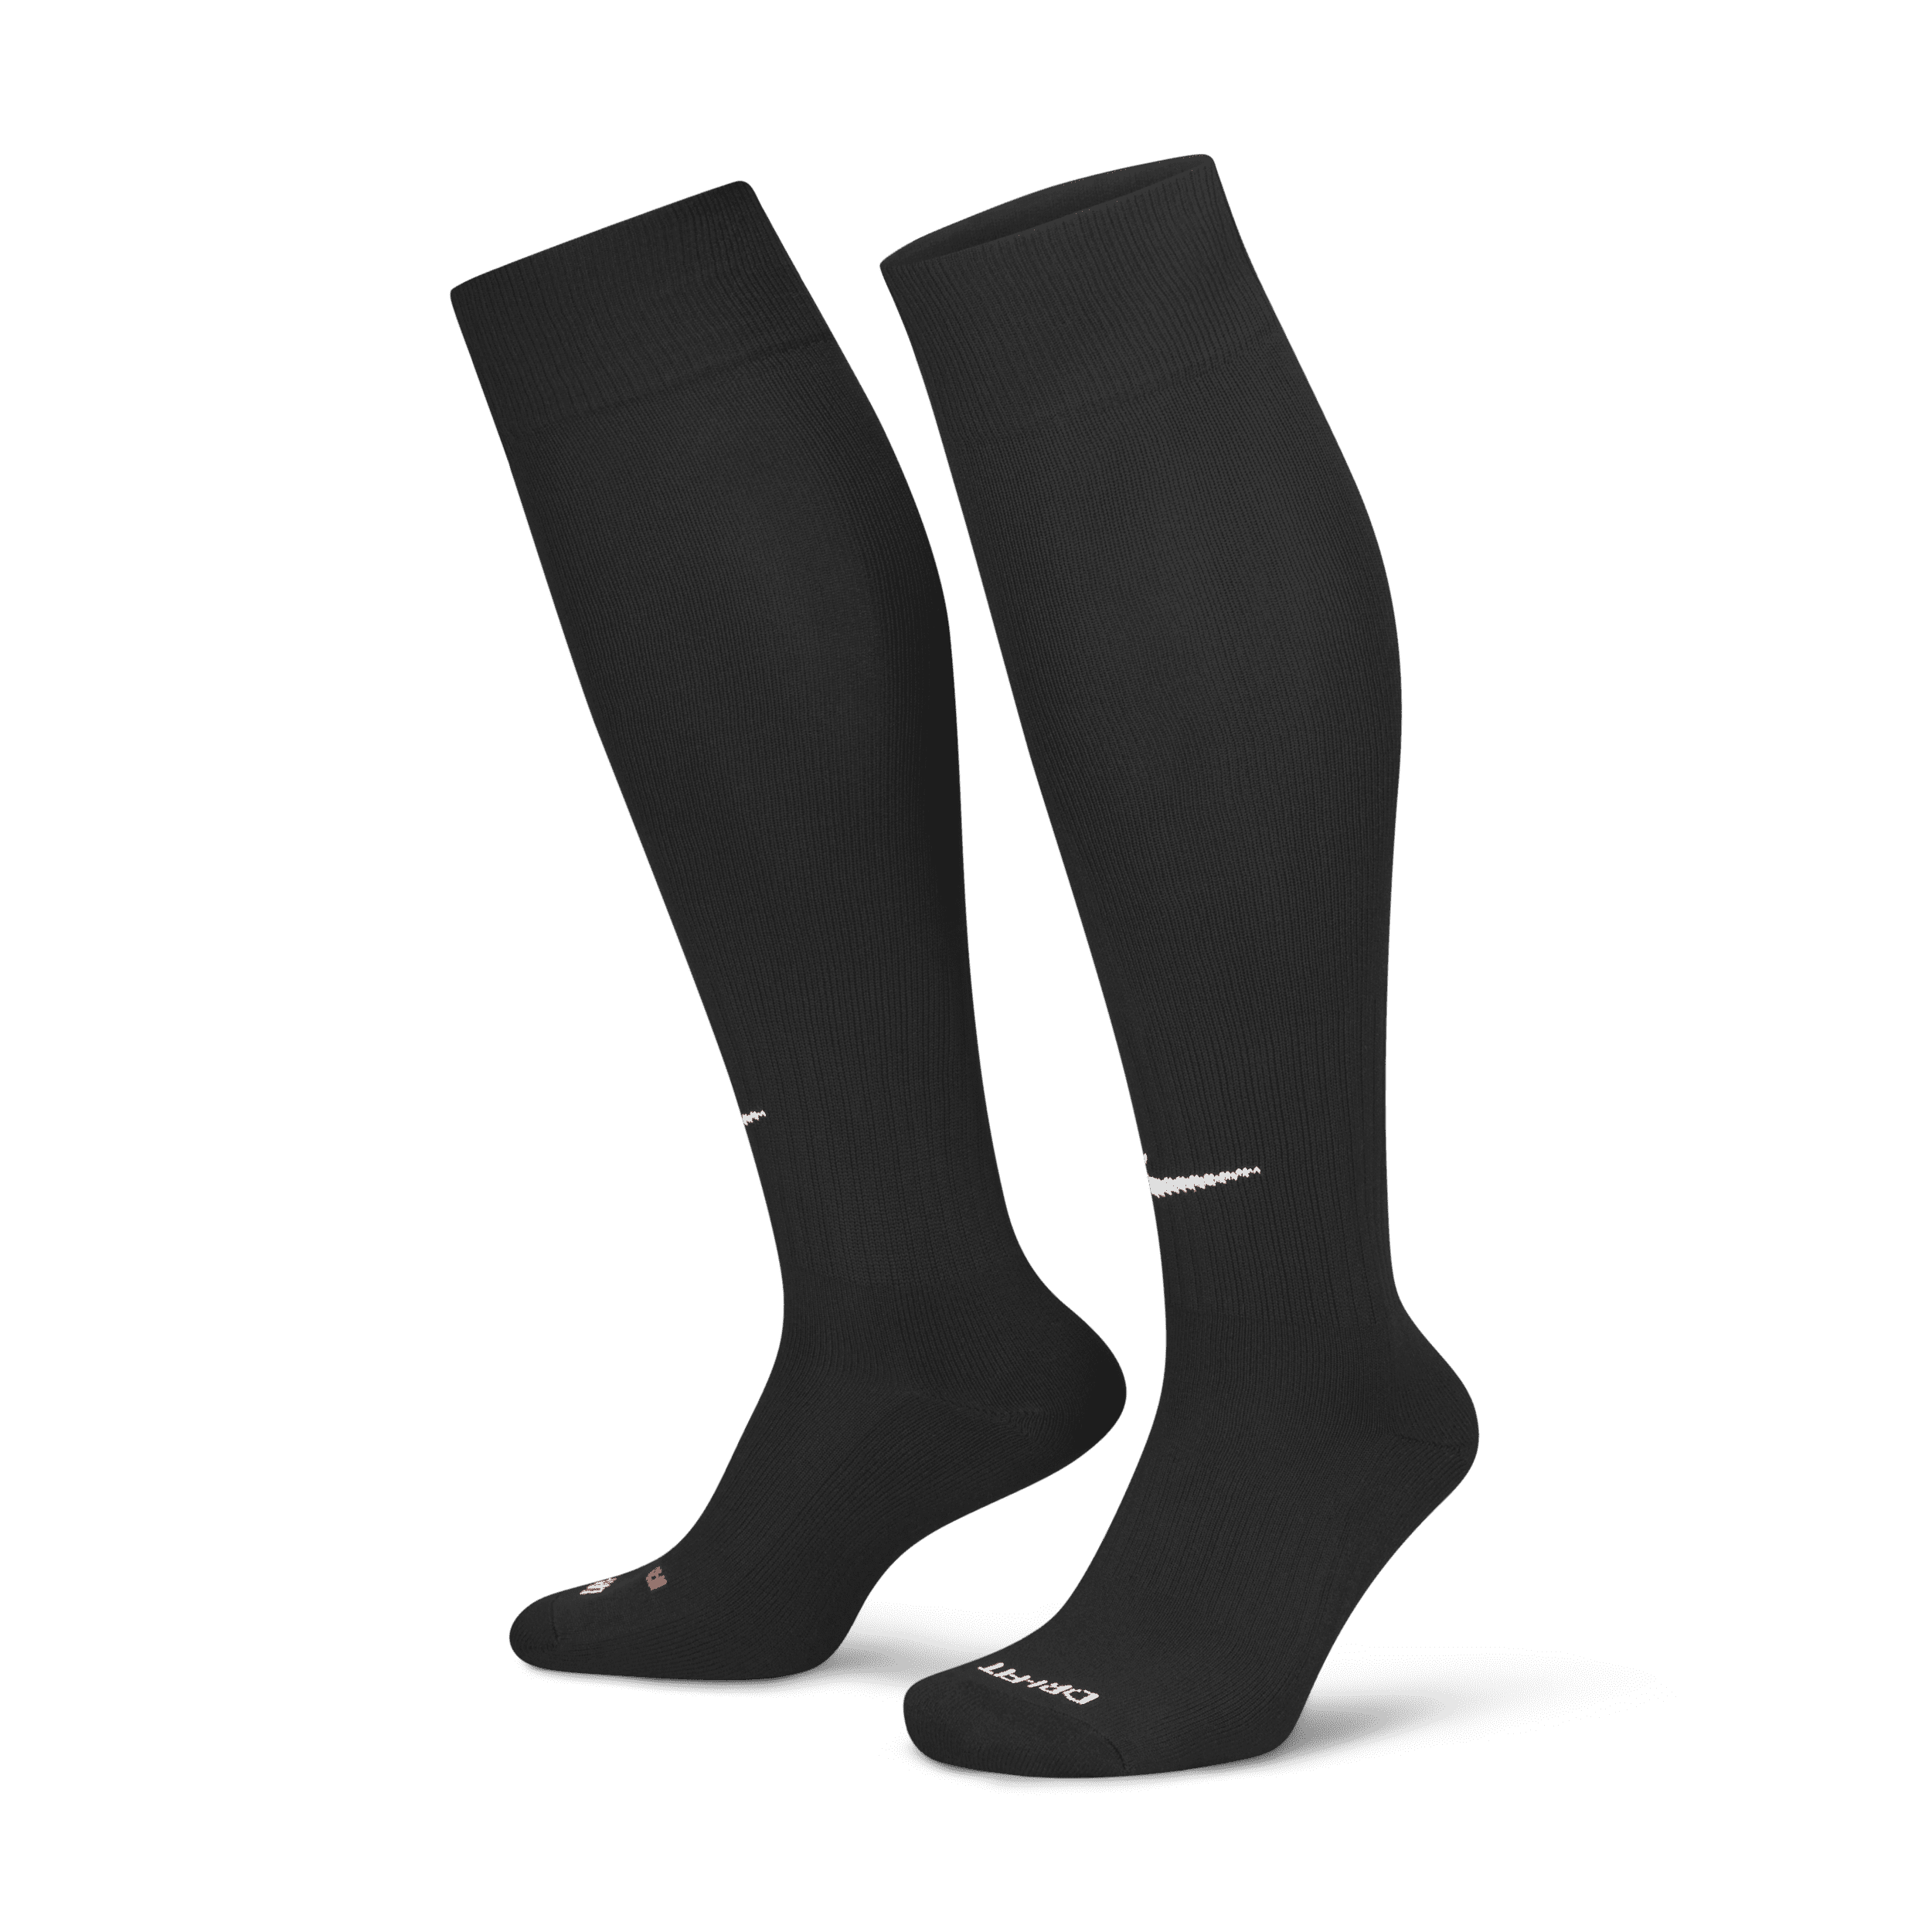 Nike Classic 2 Calcetines largos con amortiguación - Negro